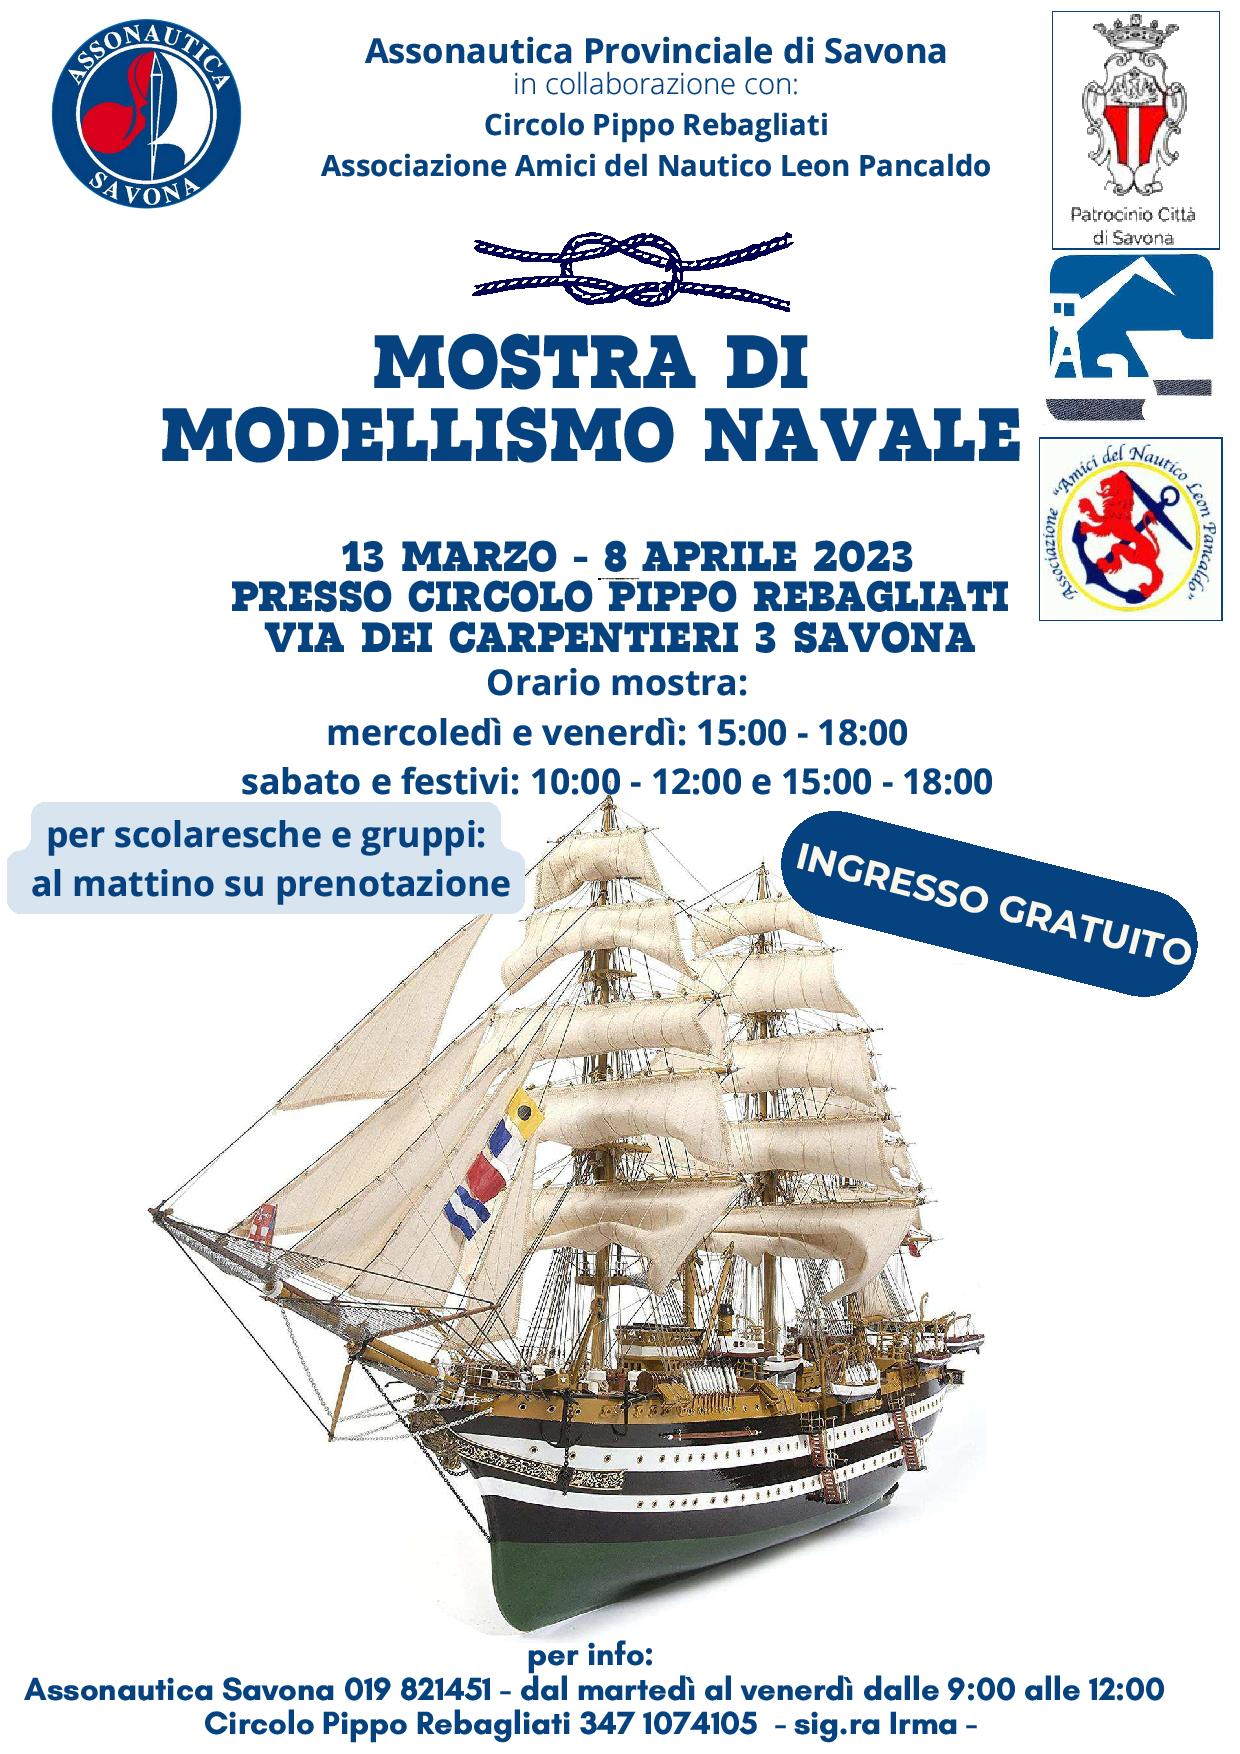 13 marzo – 8 aprile 2023 Mostra modellismo navale – Assonautica Savona